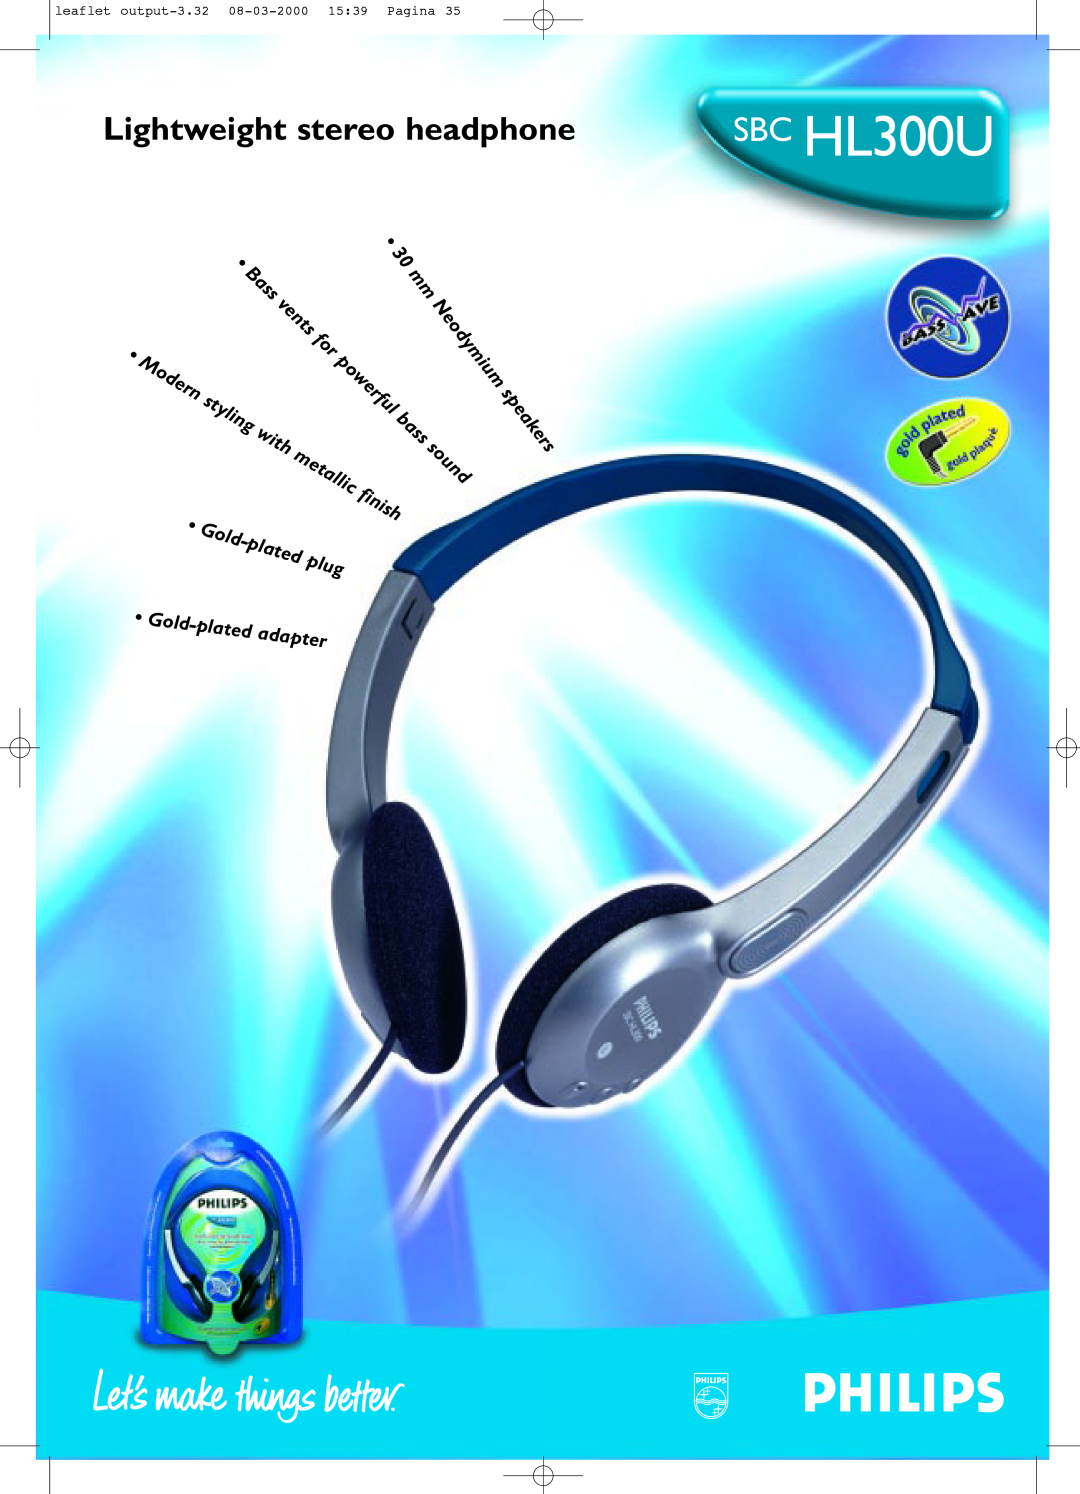 Philips SBC HL300U manual Lightweight stereo headphone, vents, bass, Neodymium, Bass, sound, Gold-platedadapter, speakers 